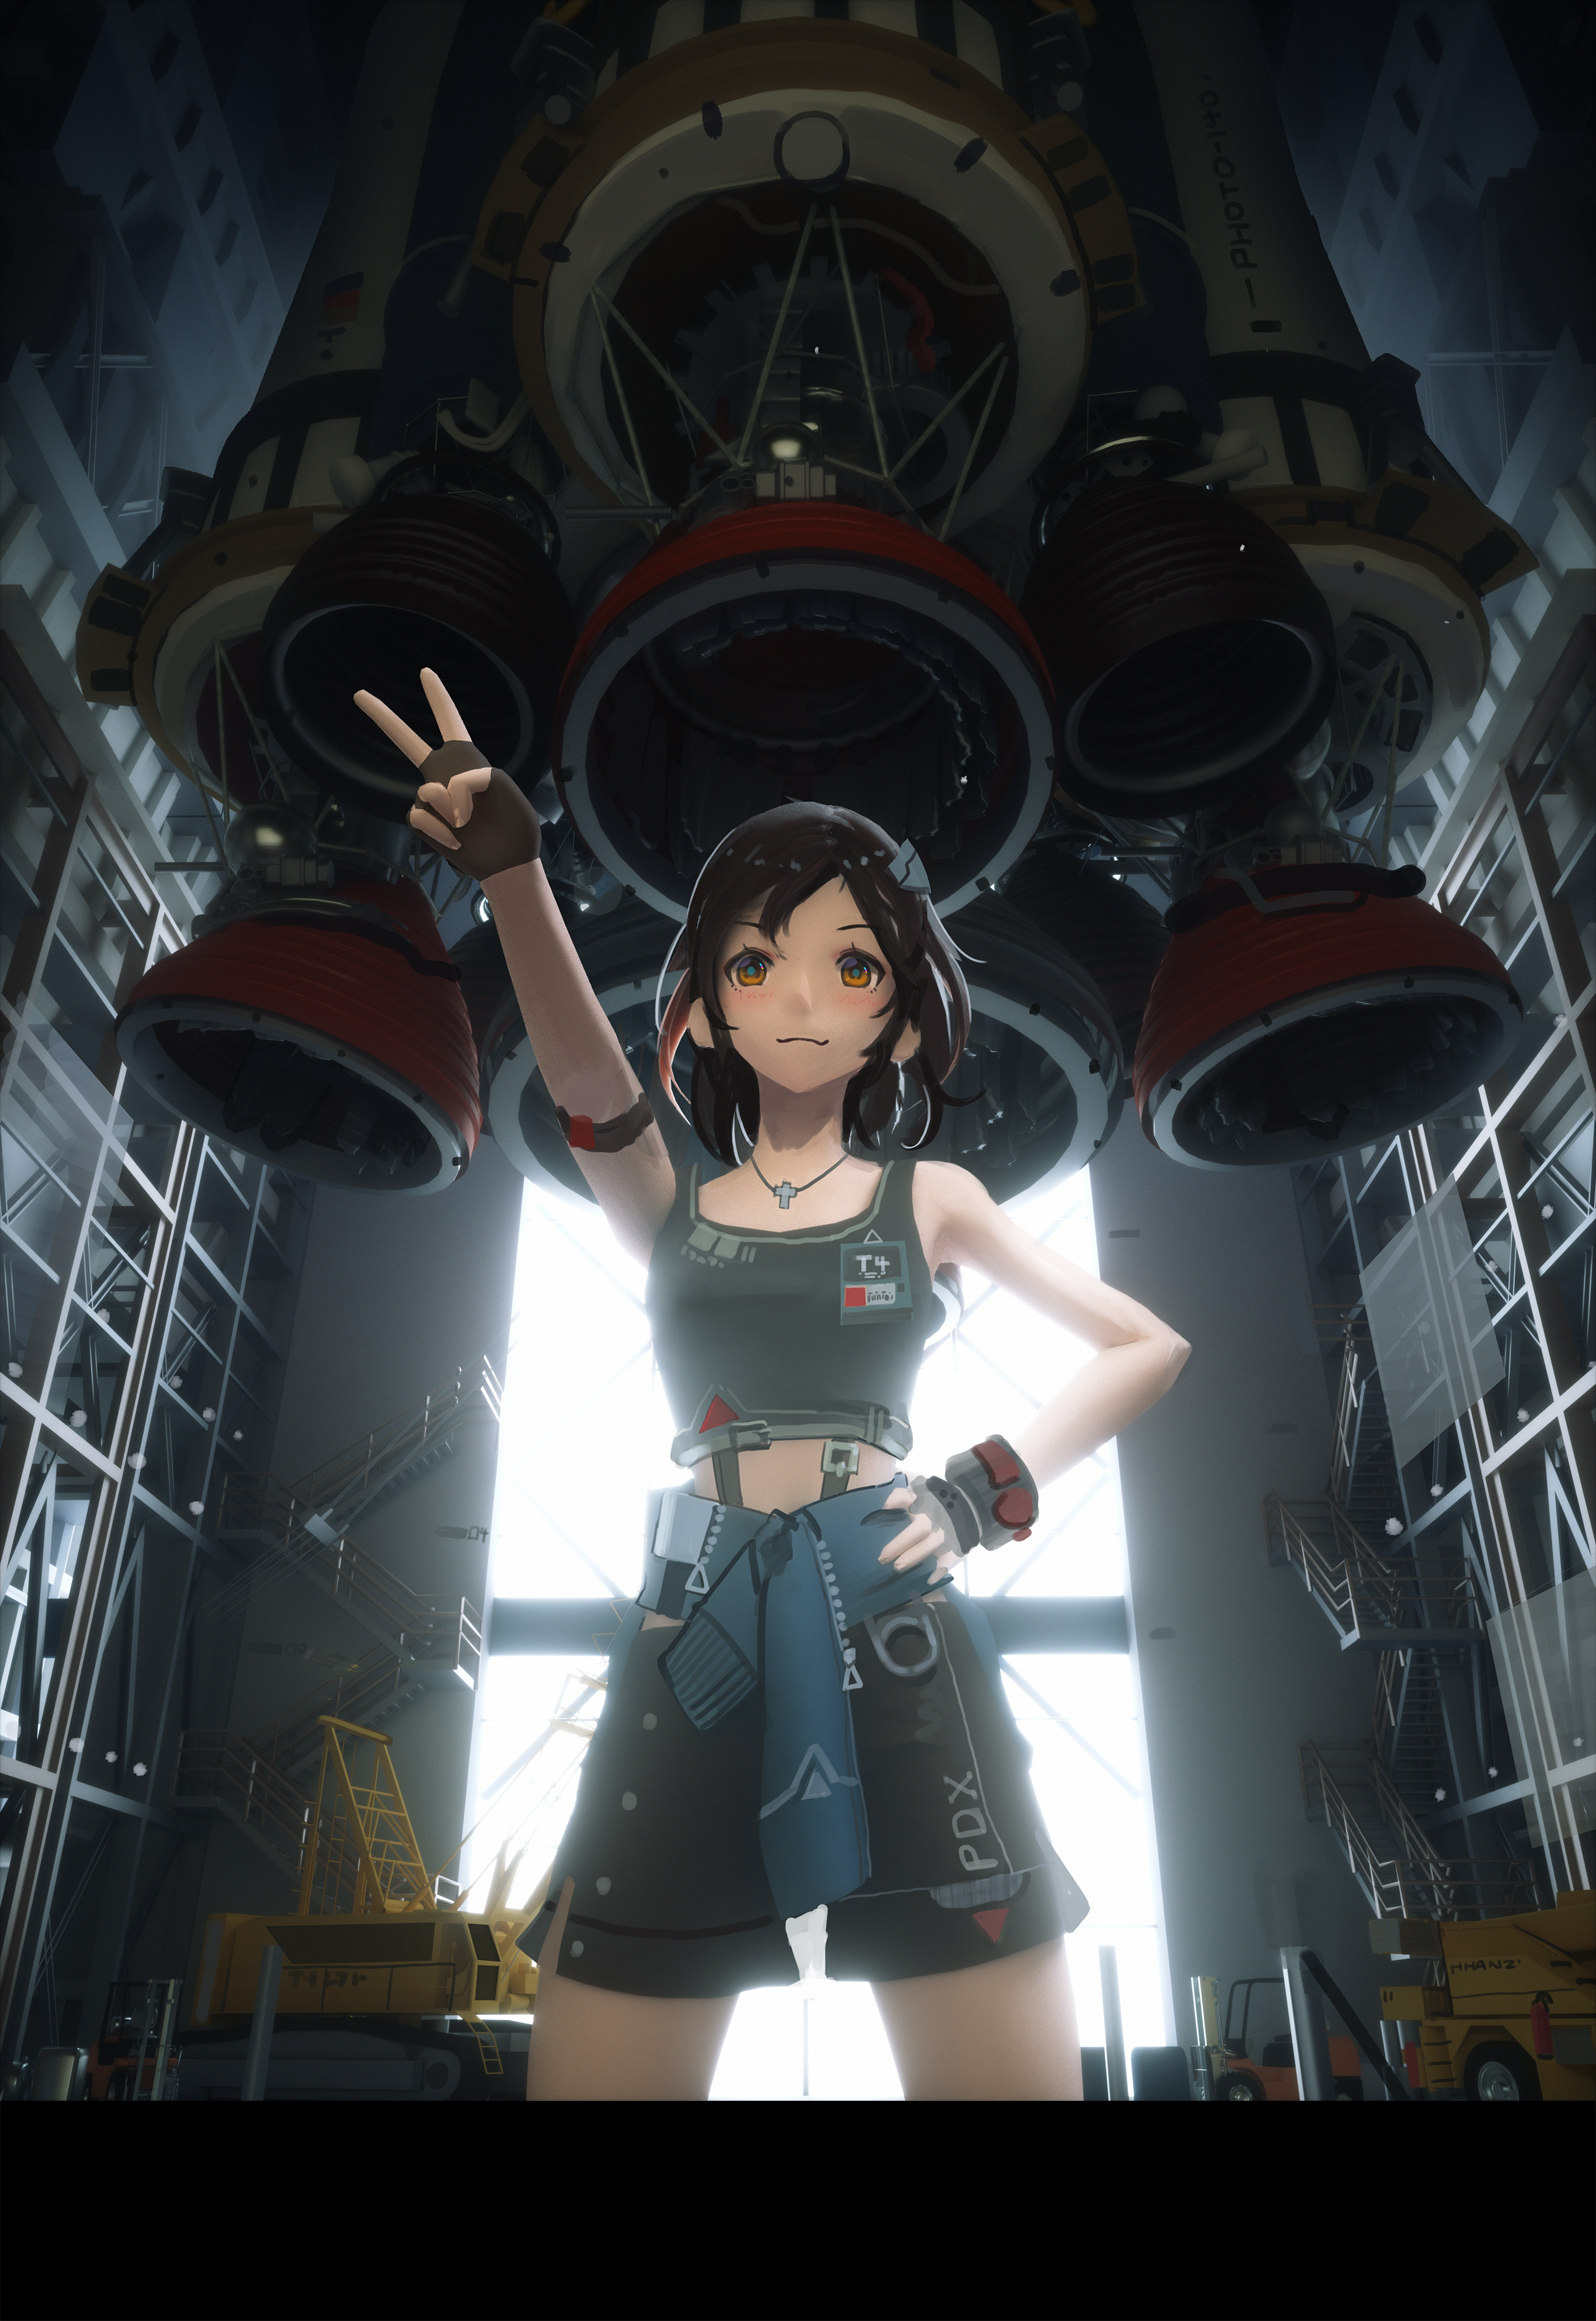 T5 Anime Girls Science Fiction Rocket Science Fiction Women Anime Hand Gesture Brunette Standing Han 2560x3723